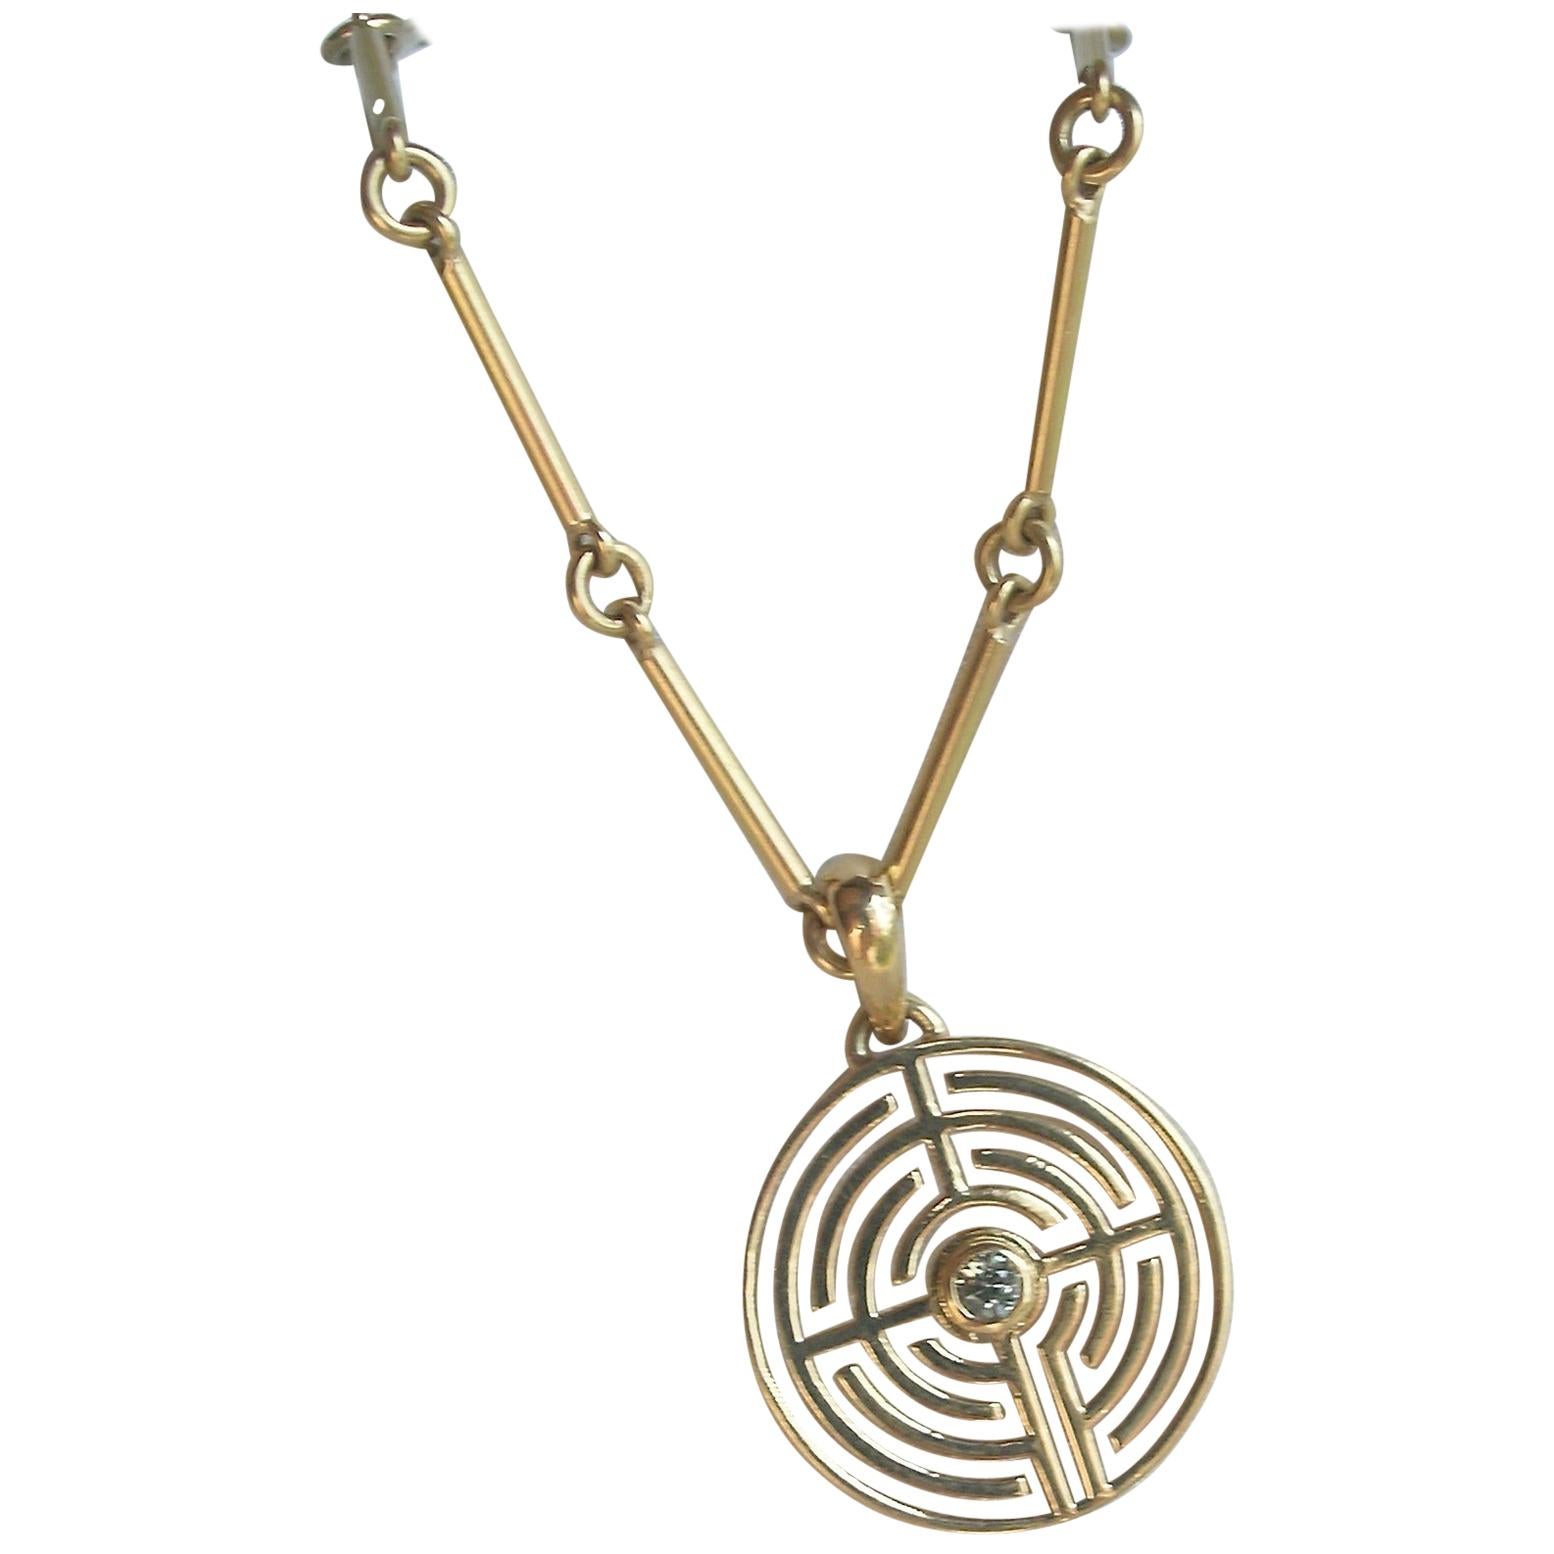 18 Karat Gold Small Labyrinth Pendant with Gemstone